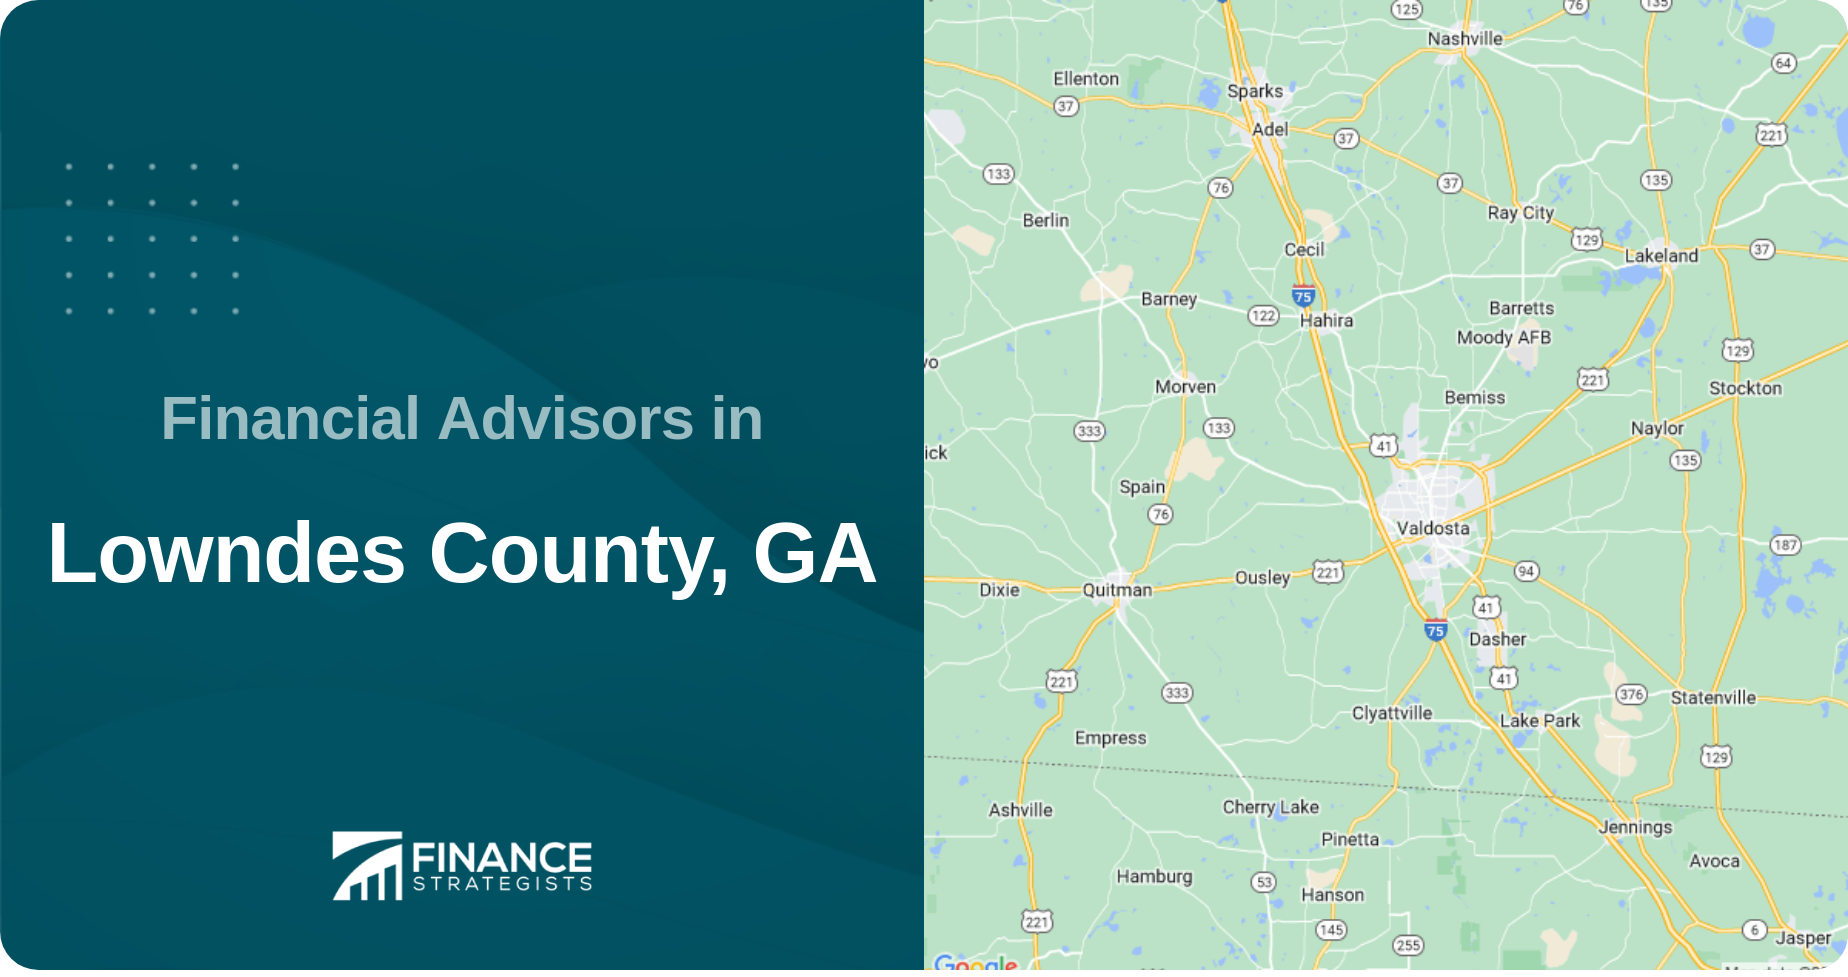 Financial Advisors in Lowndes County, GA